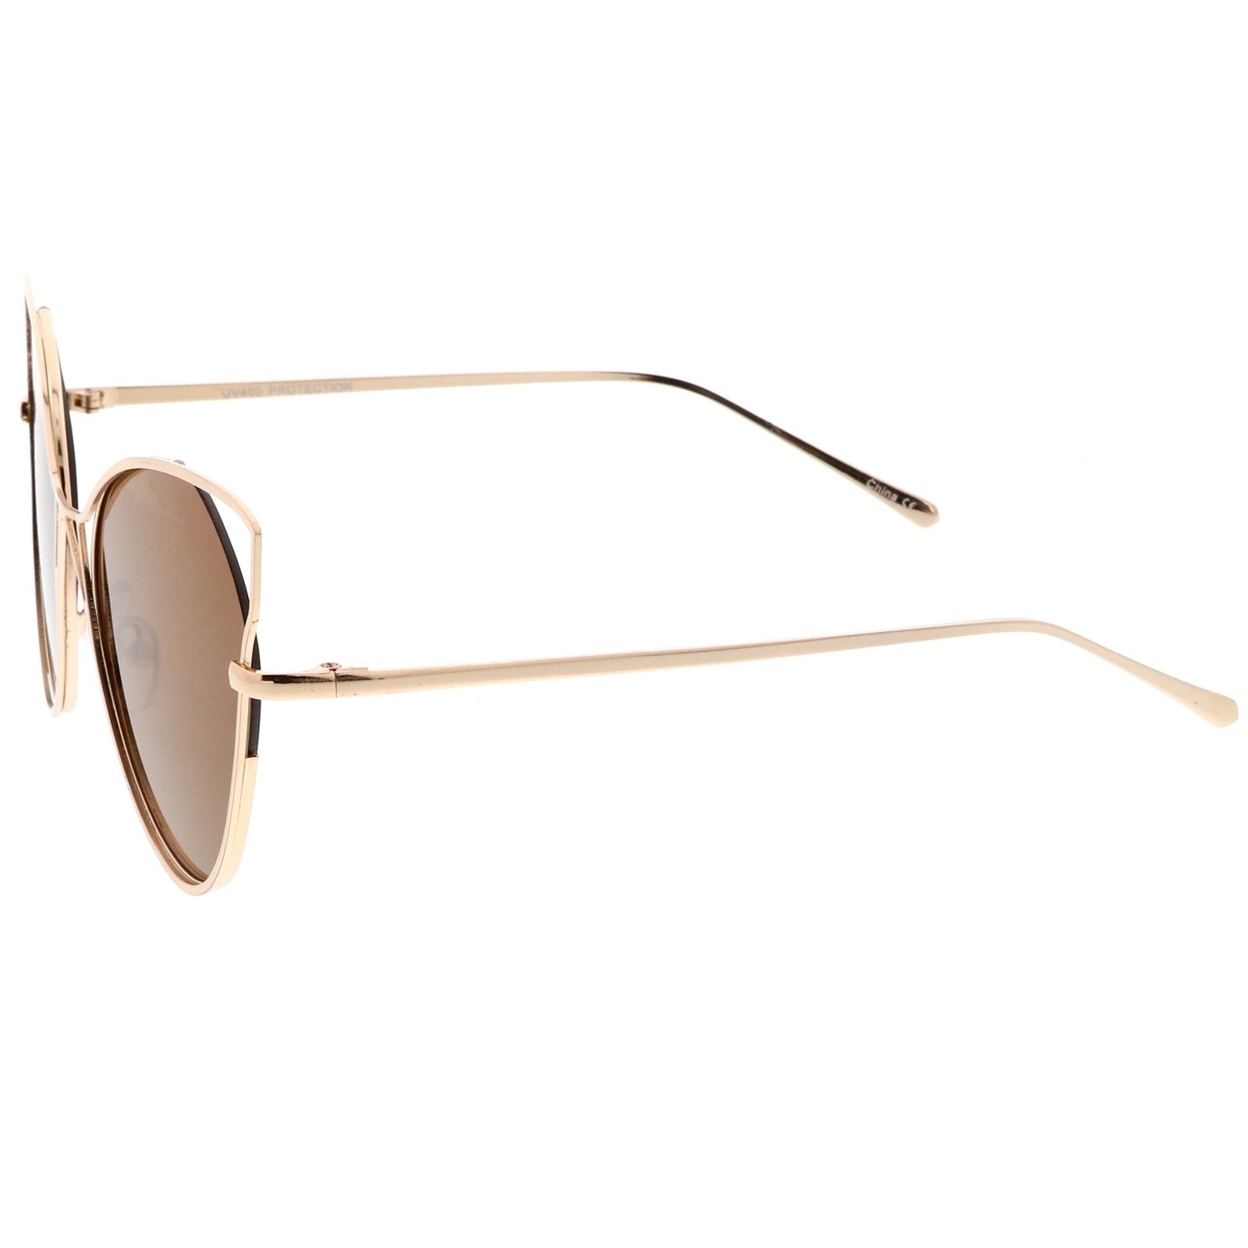 Women's Open Metal Slim Temple Neutral Colored Flat Lens Oversize Cat Eye Sunglasses 60mm - Gold / Brown